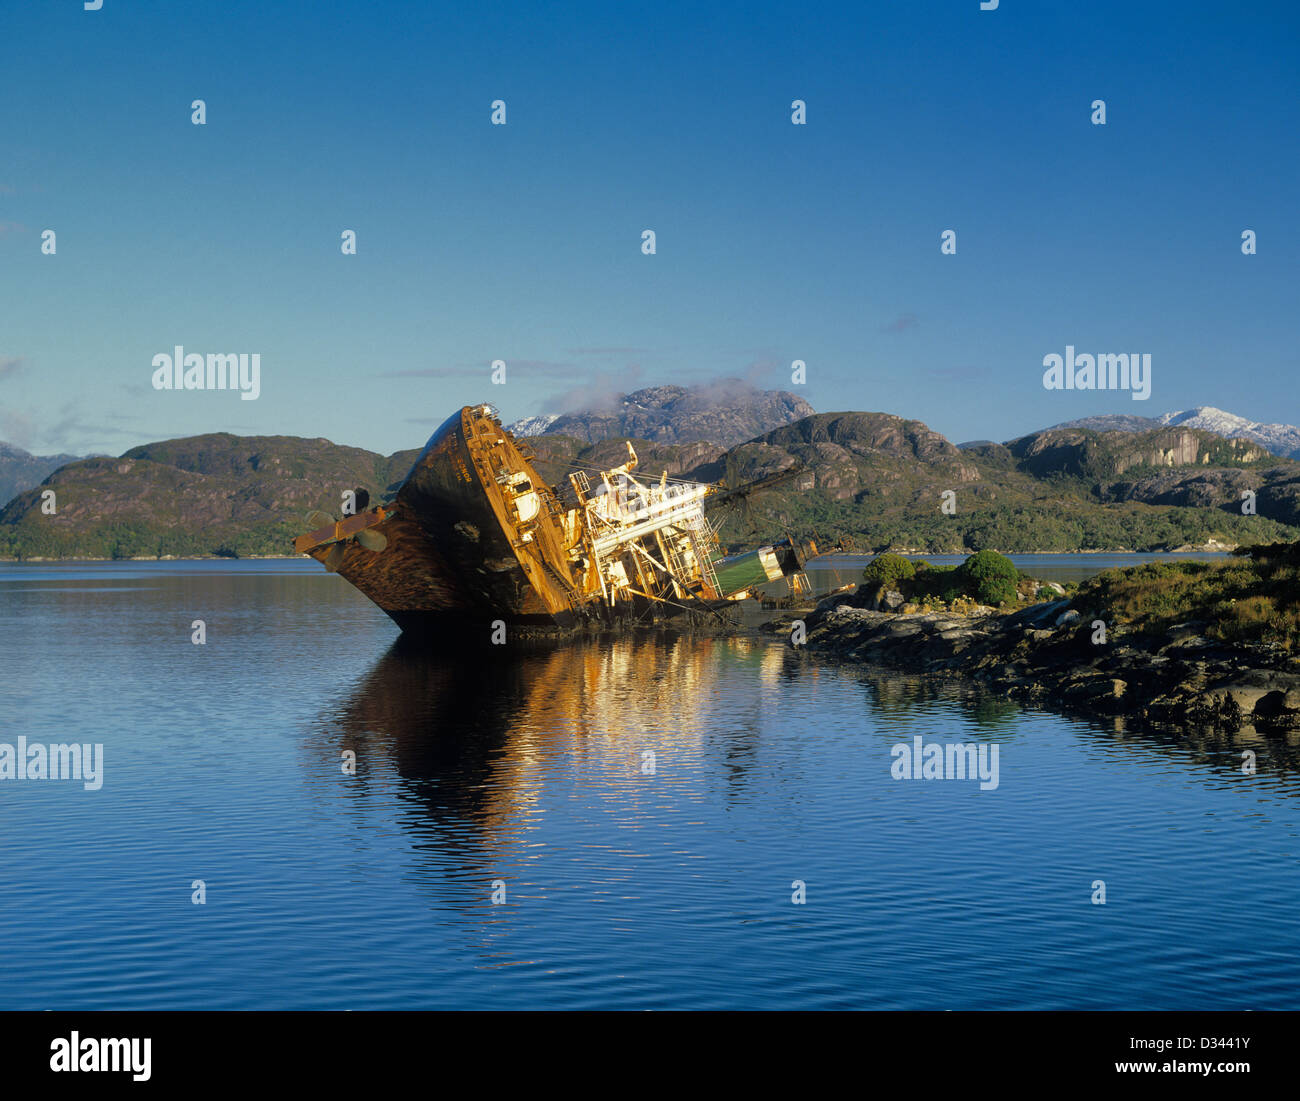 Chile, Region Magallanes, Archipelagic Chile, Canal Mayne, Untiefe Pass, Wrack der "Santa Eleonor". Stockfoto